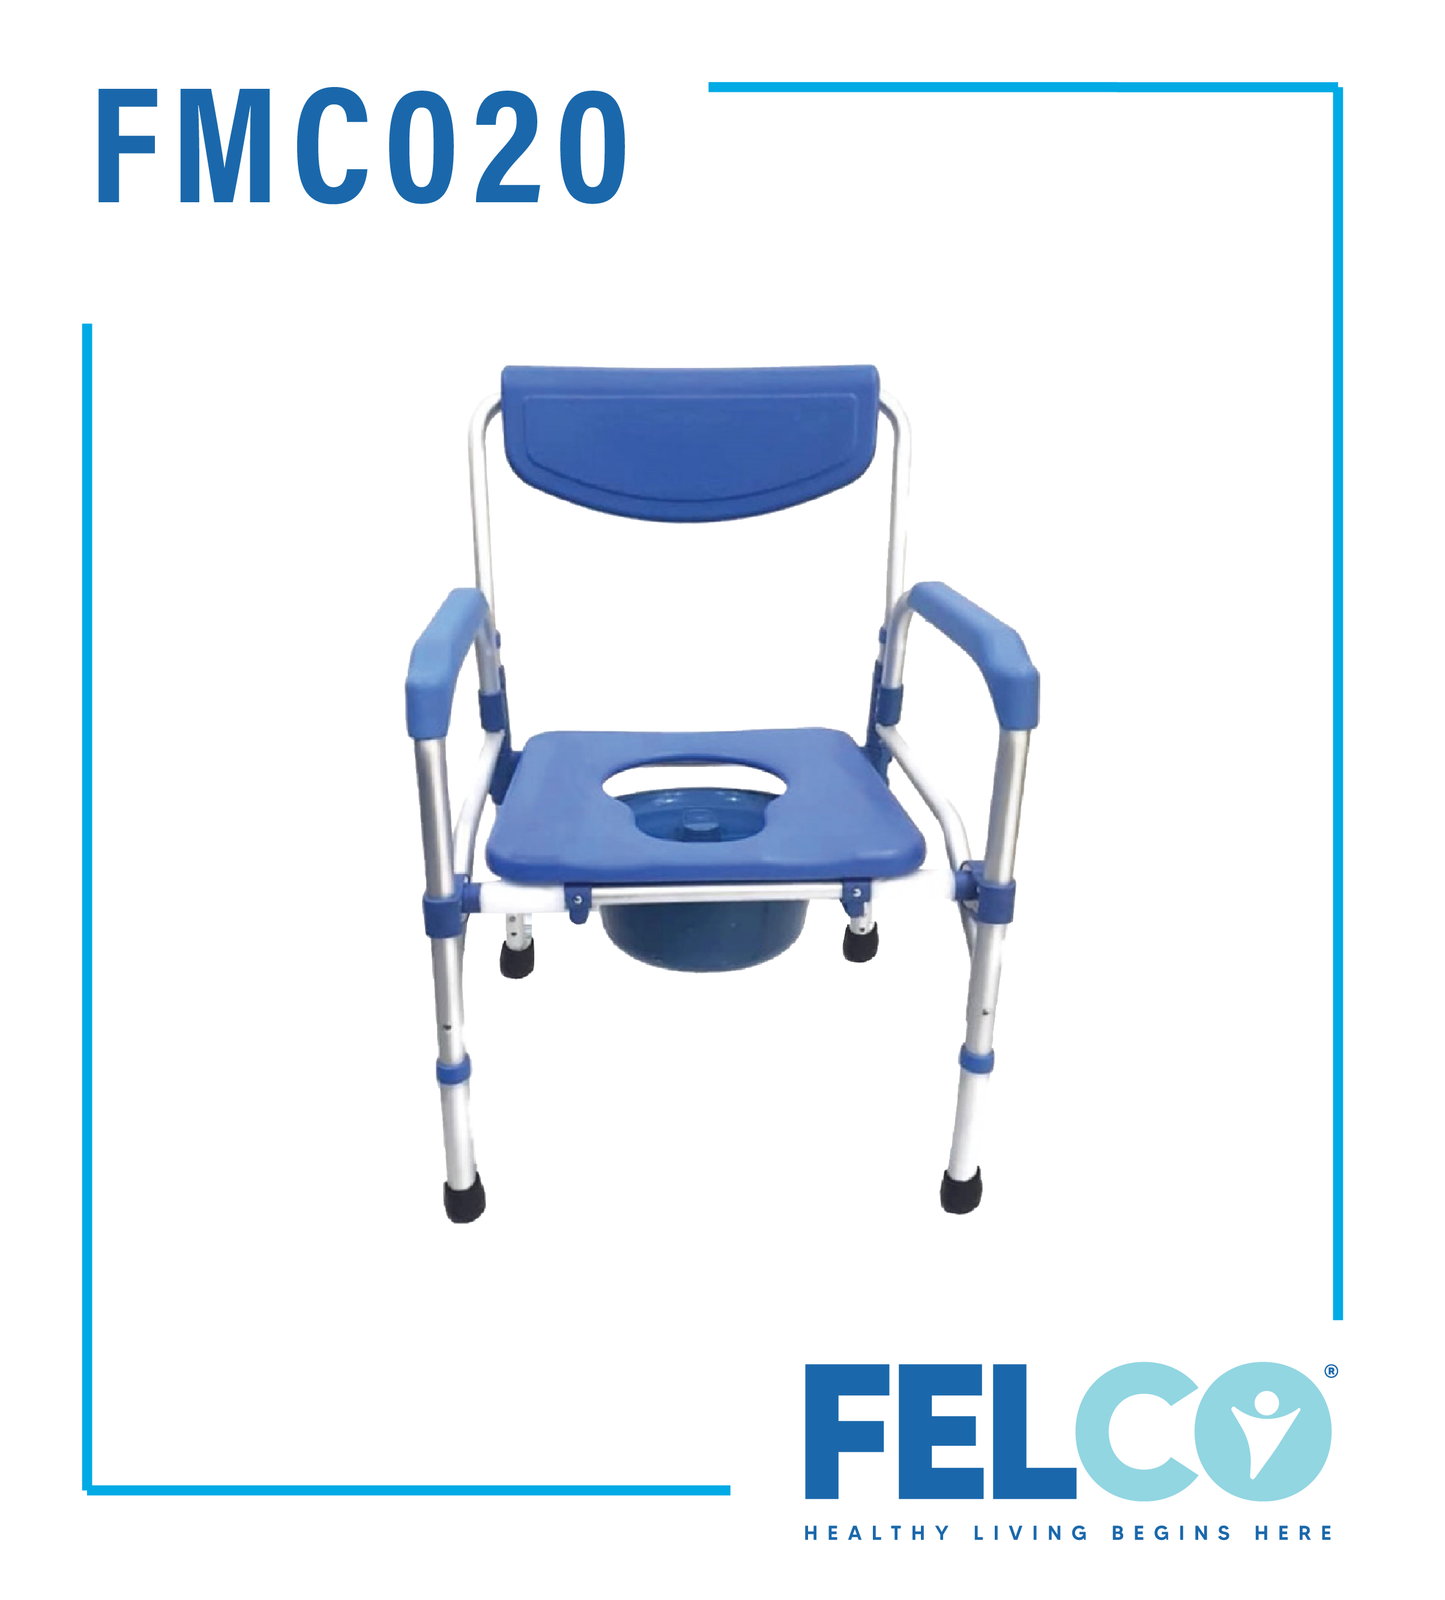 FMC020 Aluminium Foldable Commode Chair